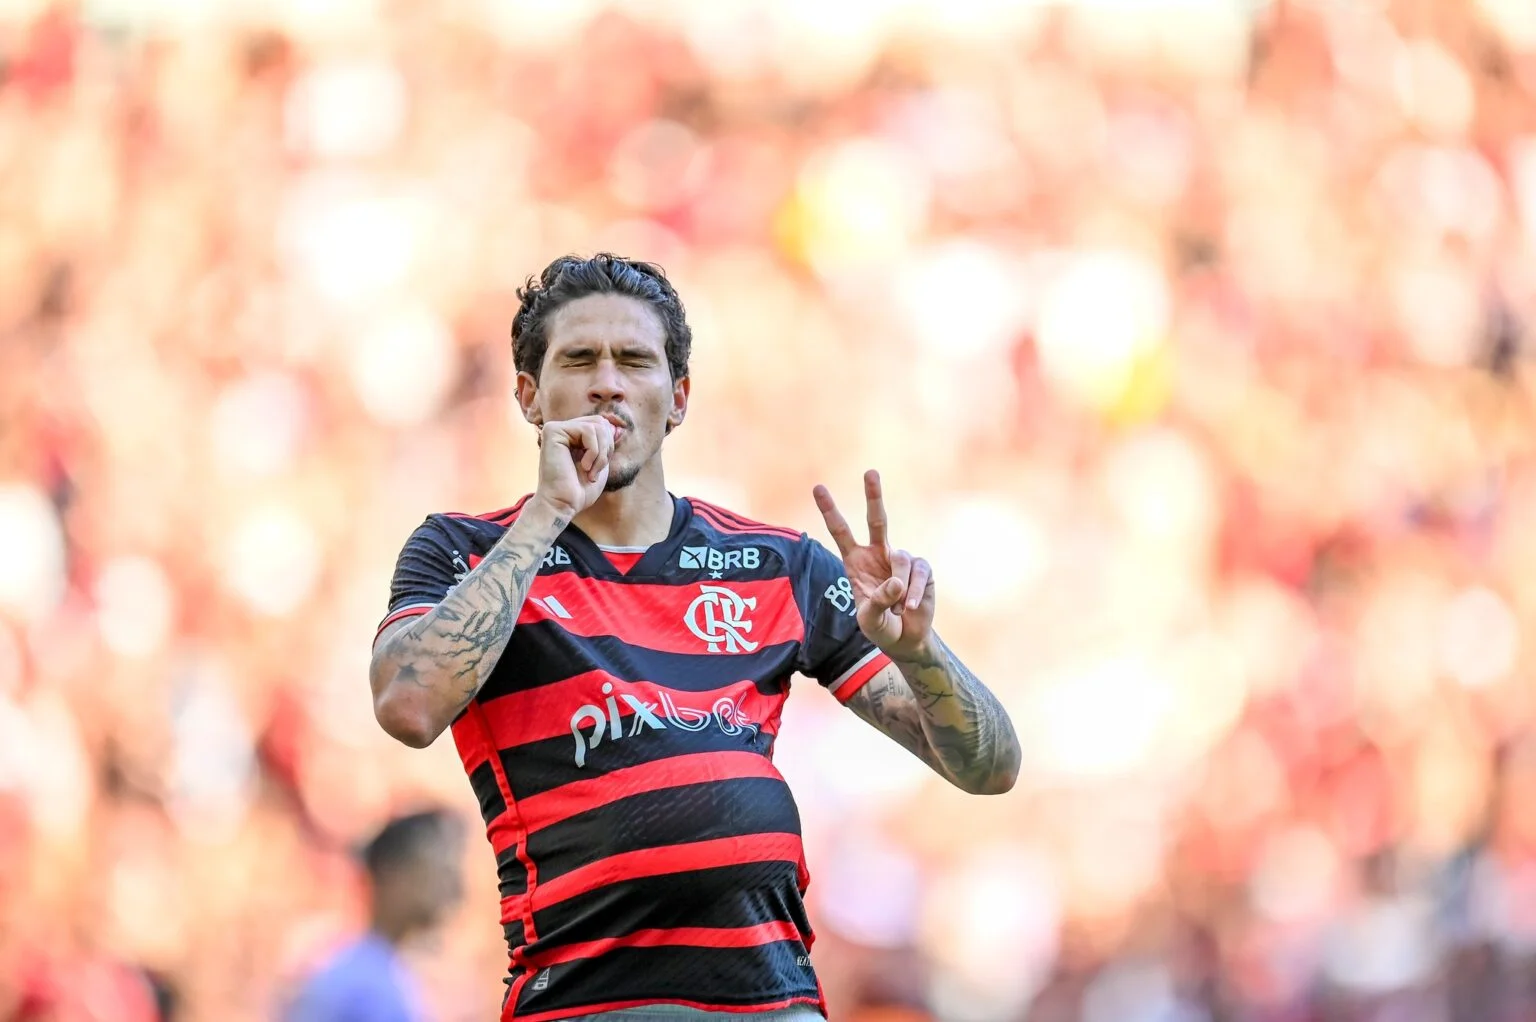 Flamengo vence Fluminense e se aproxima do título da Taça Guanabara